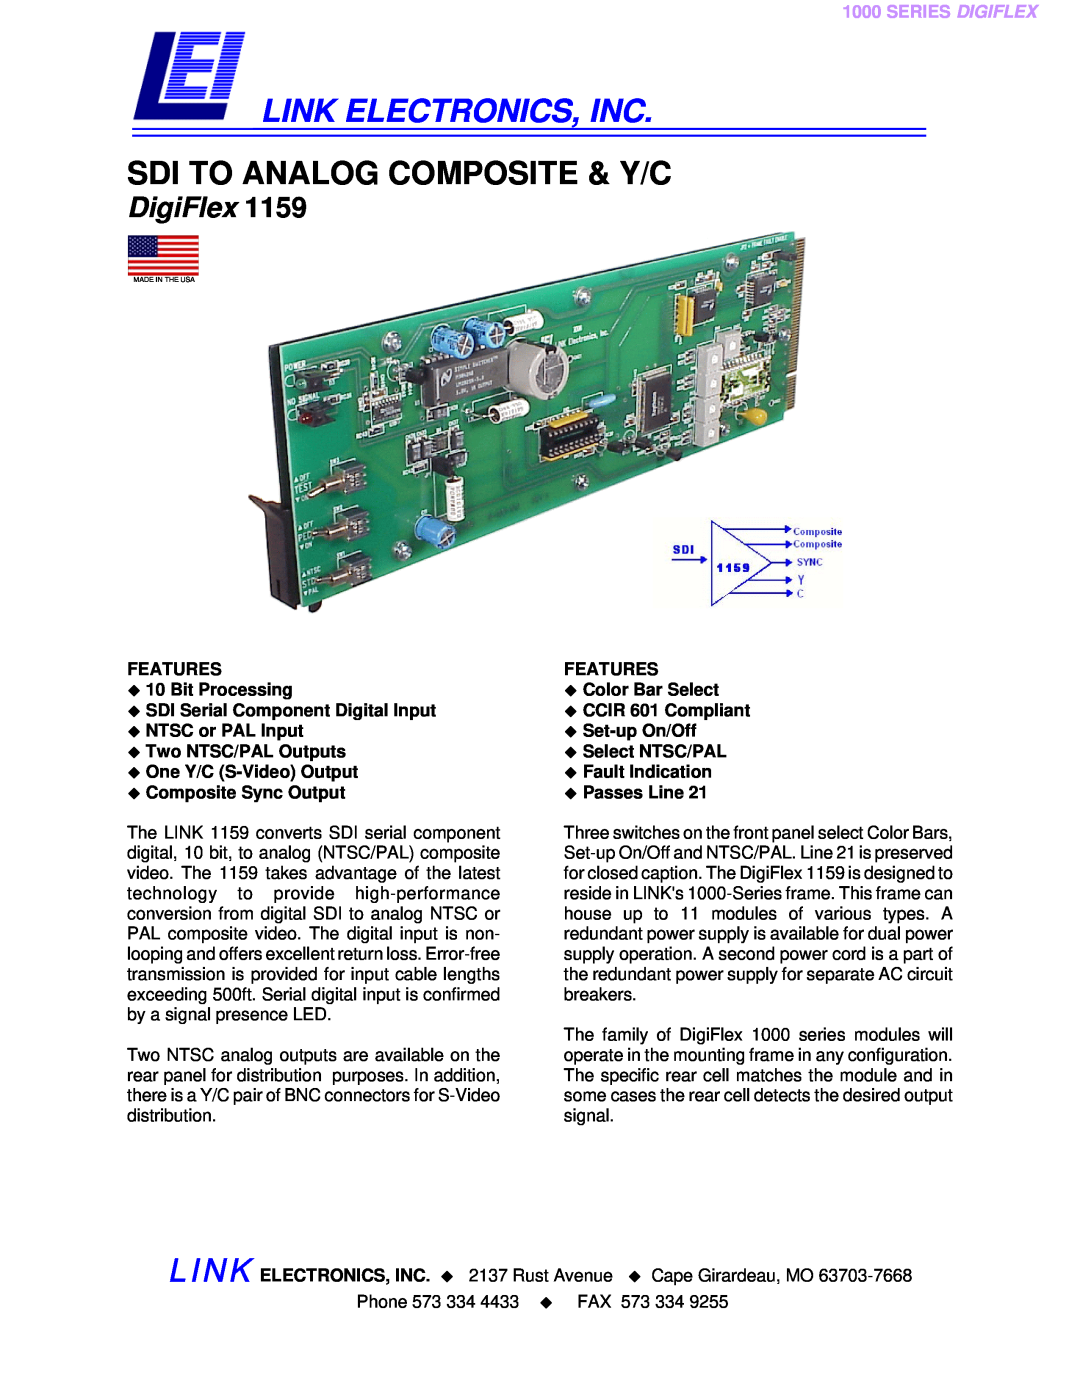 Link electronic DigiFlex 1159 manual FEATURES ‹ 10 Bit Processing ‹ SDI Serial Component Digital Input, Series Digiflex 